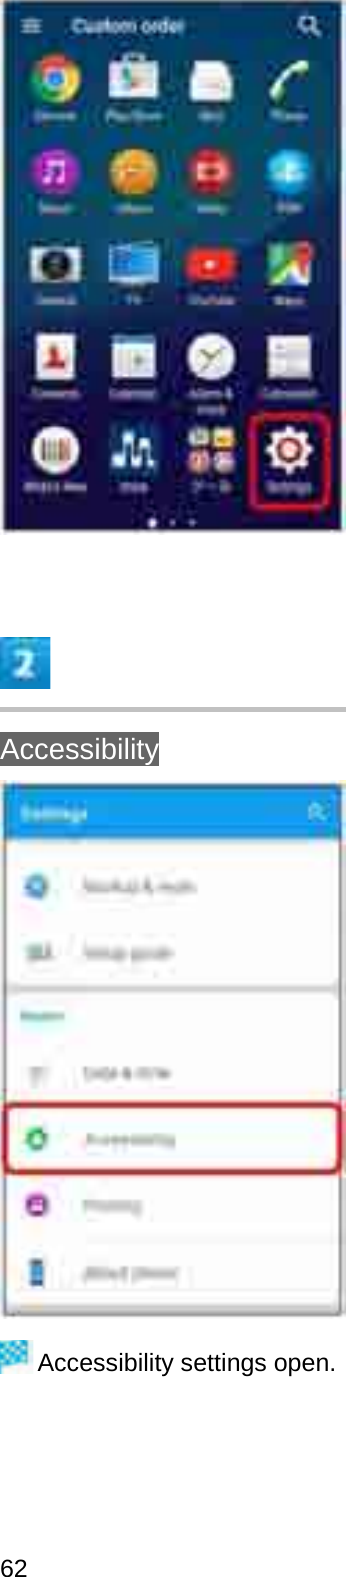 AccessibilityAccessibility settings open.62